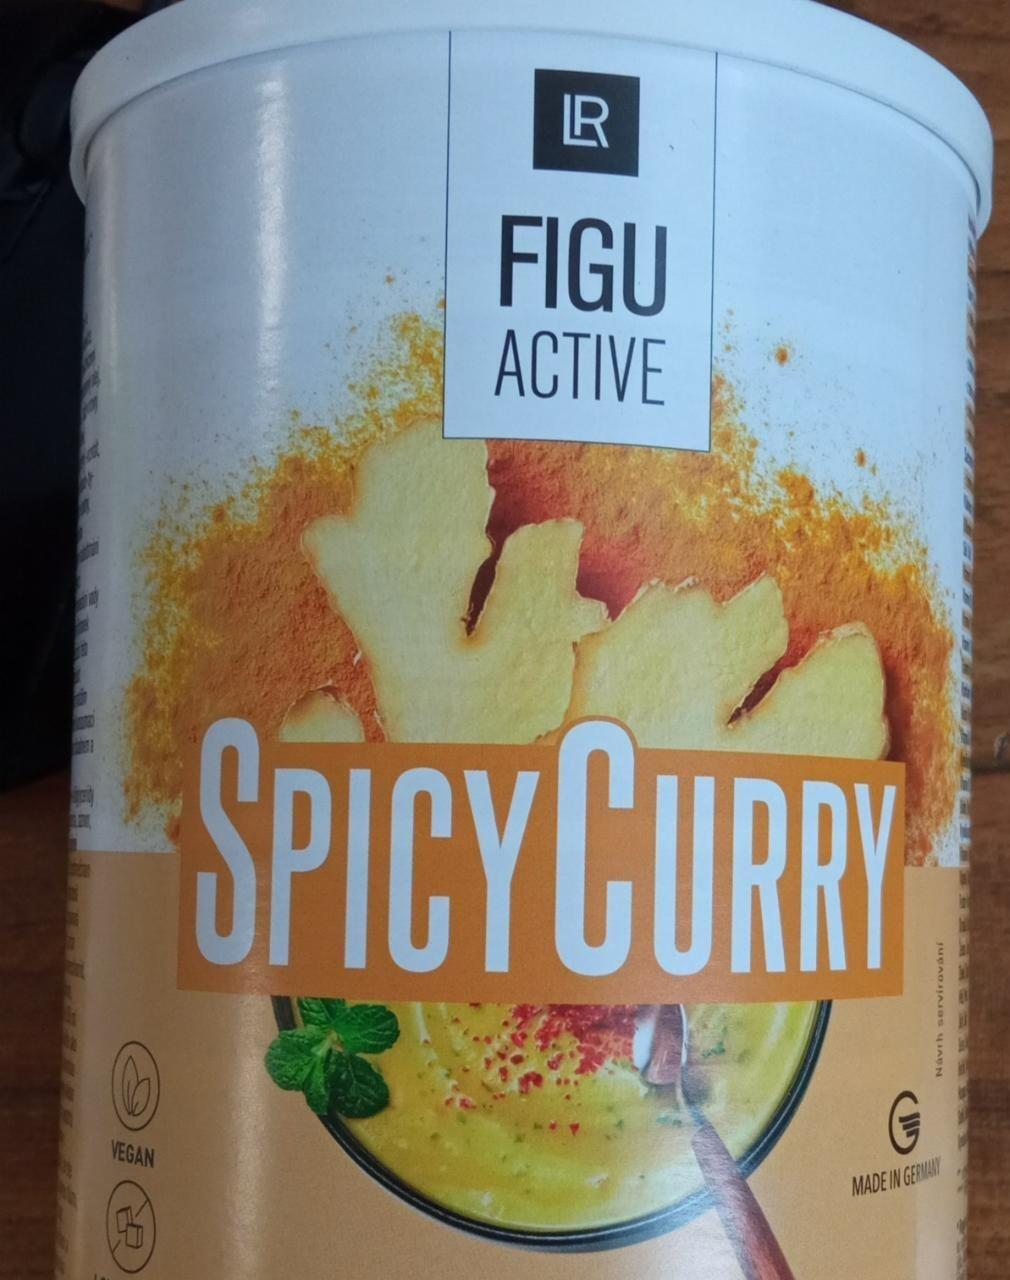 Fotografie - Spicy Curry Soup LR Figu Active